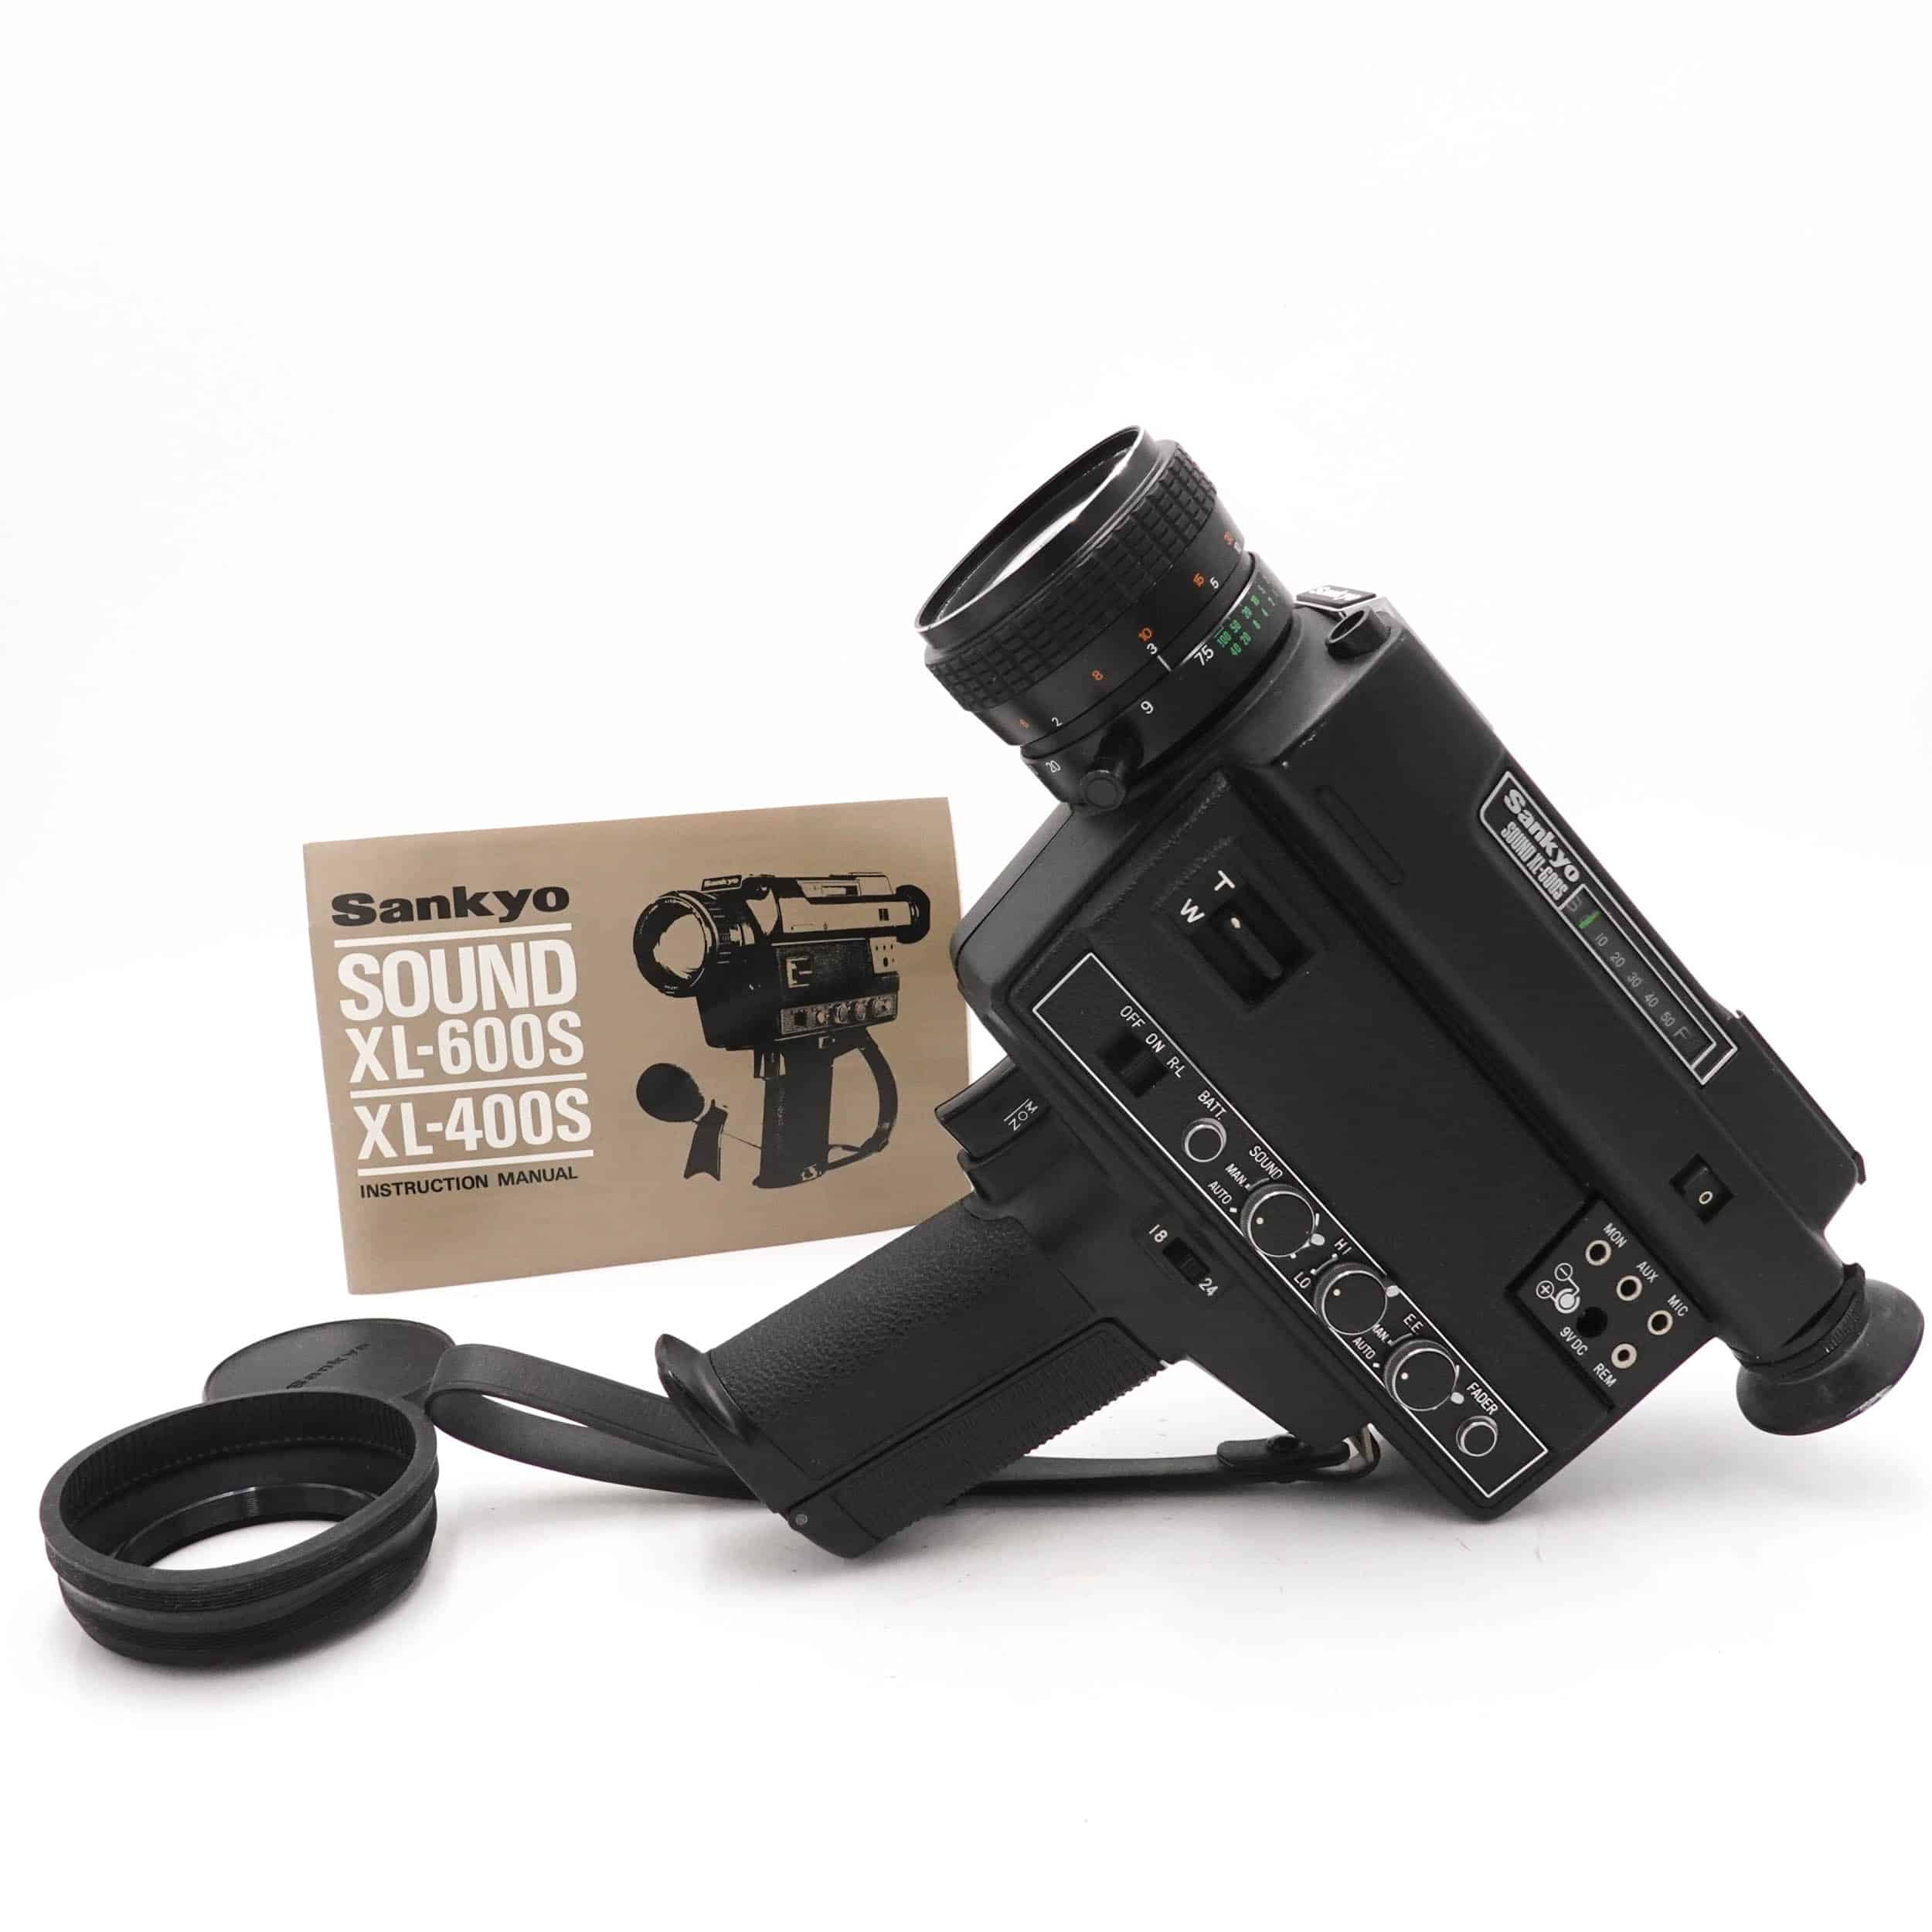 Sankyo Sound XL-600s Super 8 Camera